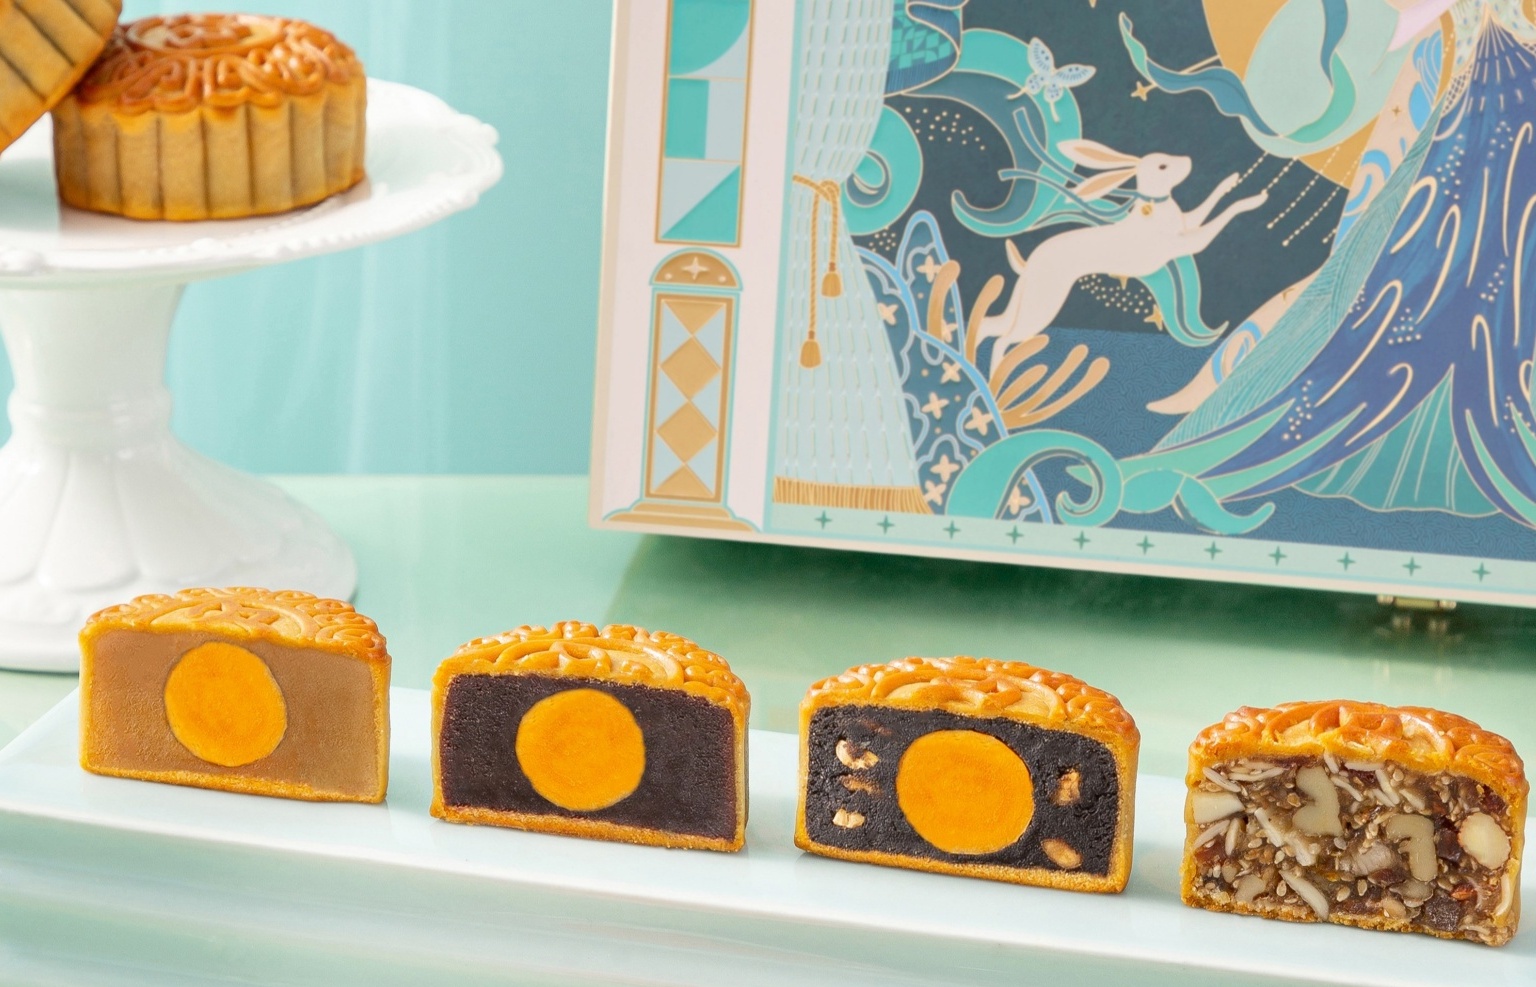 Hanoi Hotel unveils authentic Hong Kong mooncakes